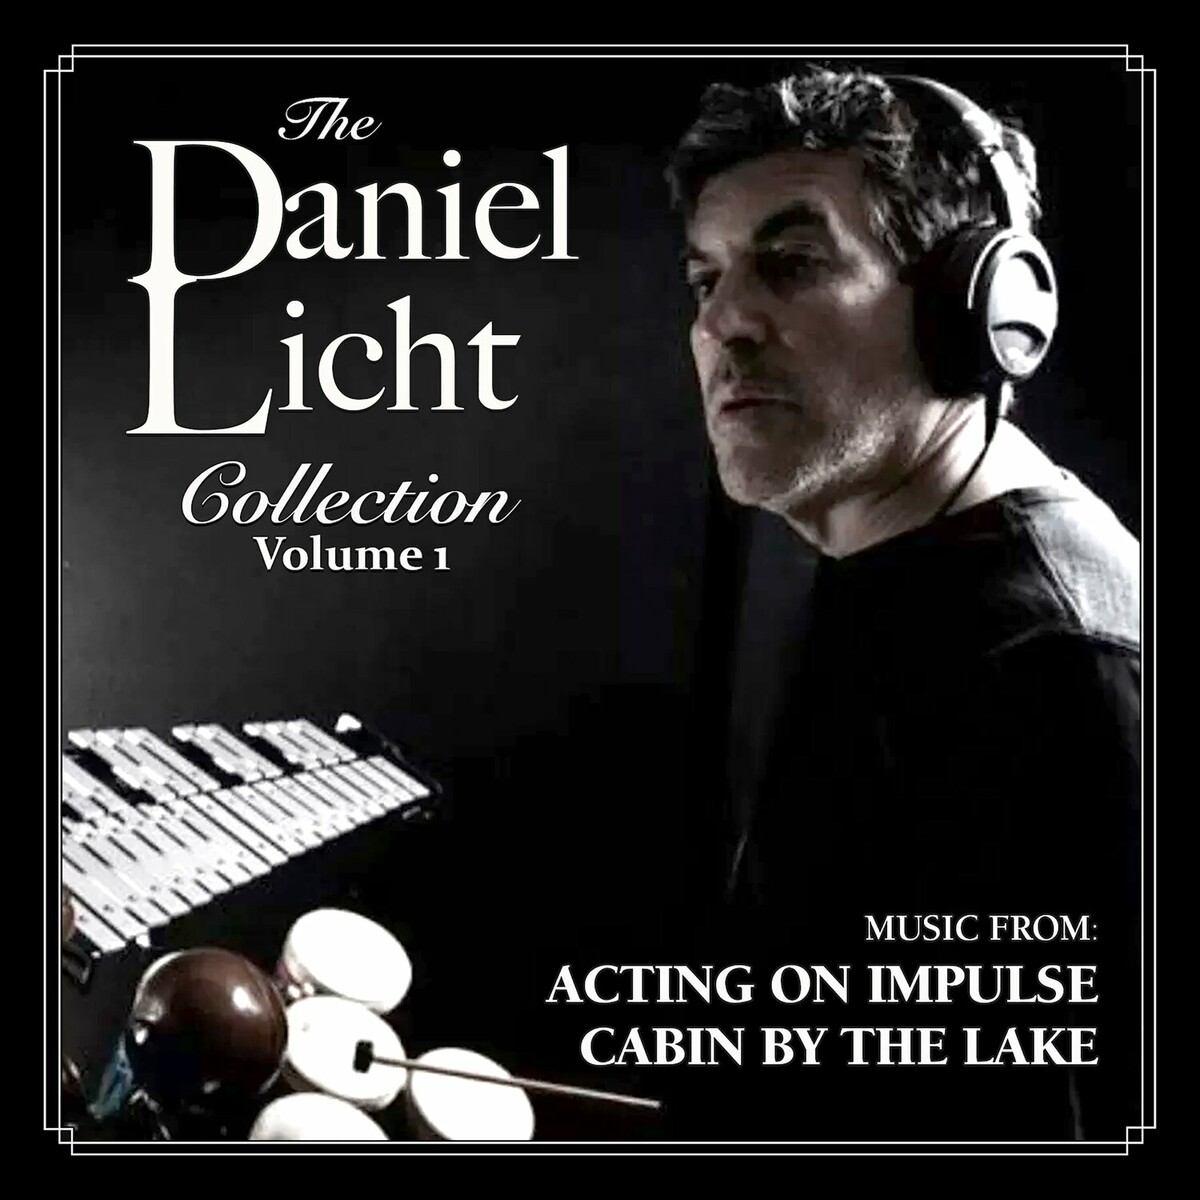 The Daniel Licht Collection Vol. 1 Soundtrack -- Seeders: 3 -- Leechers: 0